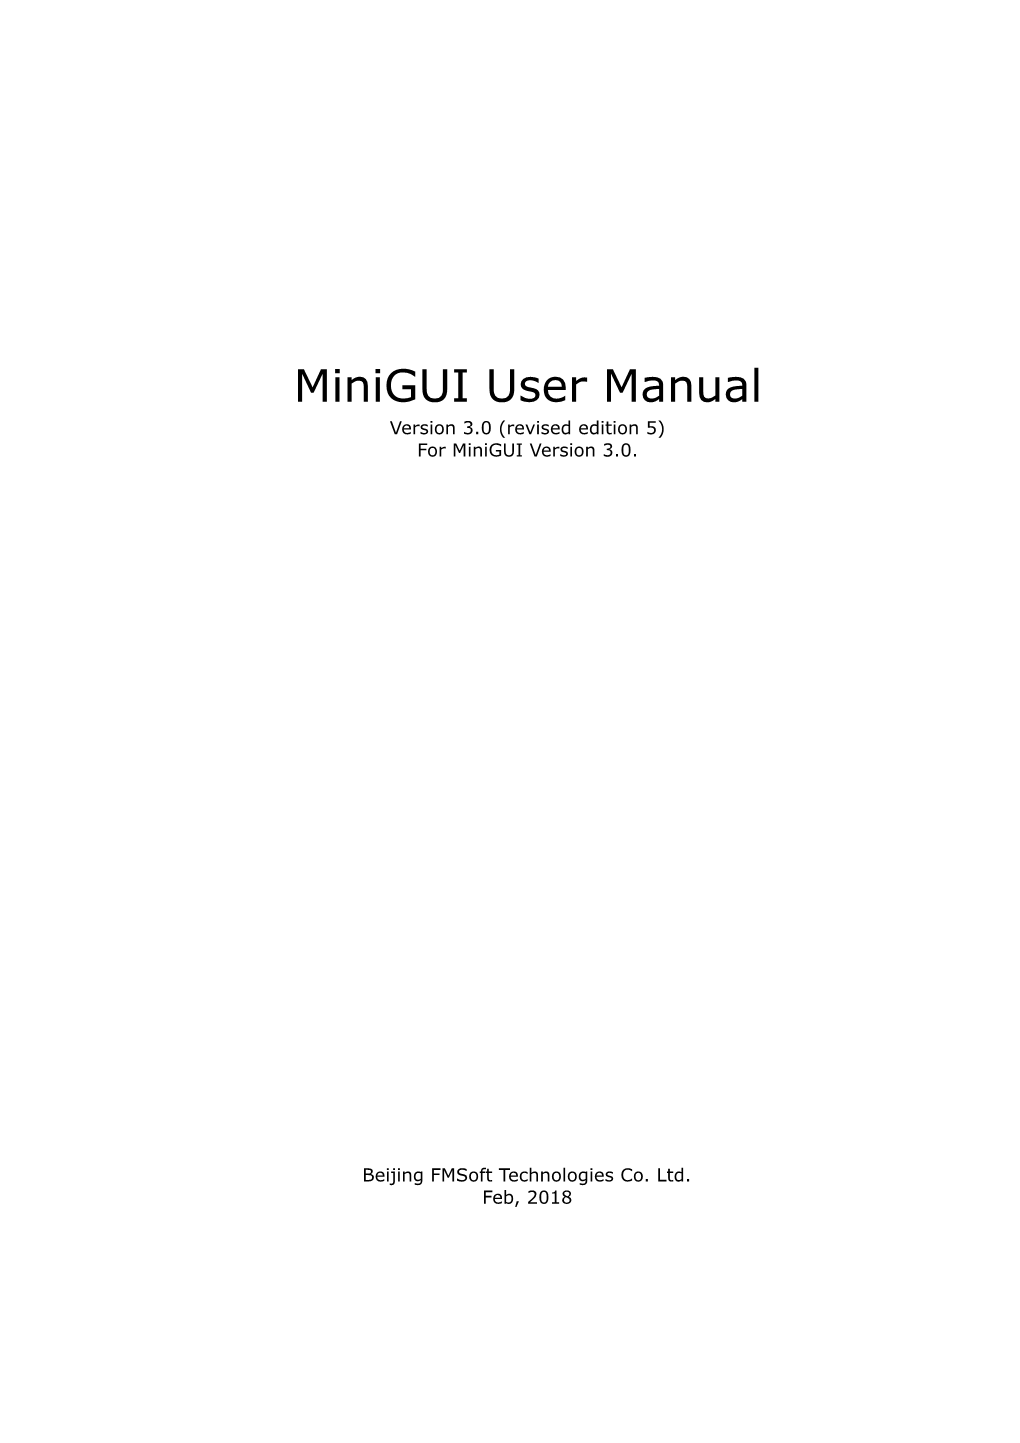 MINIGUI-USER-MANUAL-V3.0-5E.Pdf